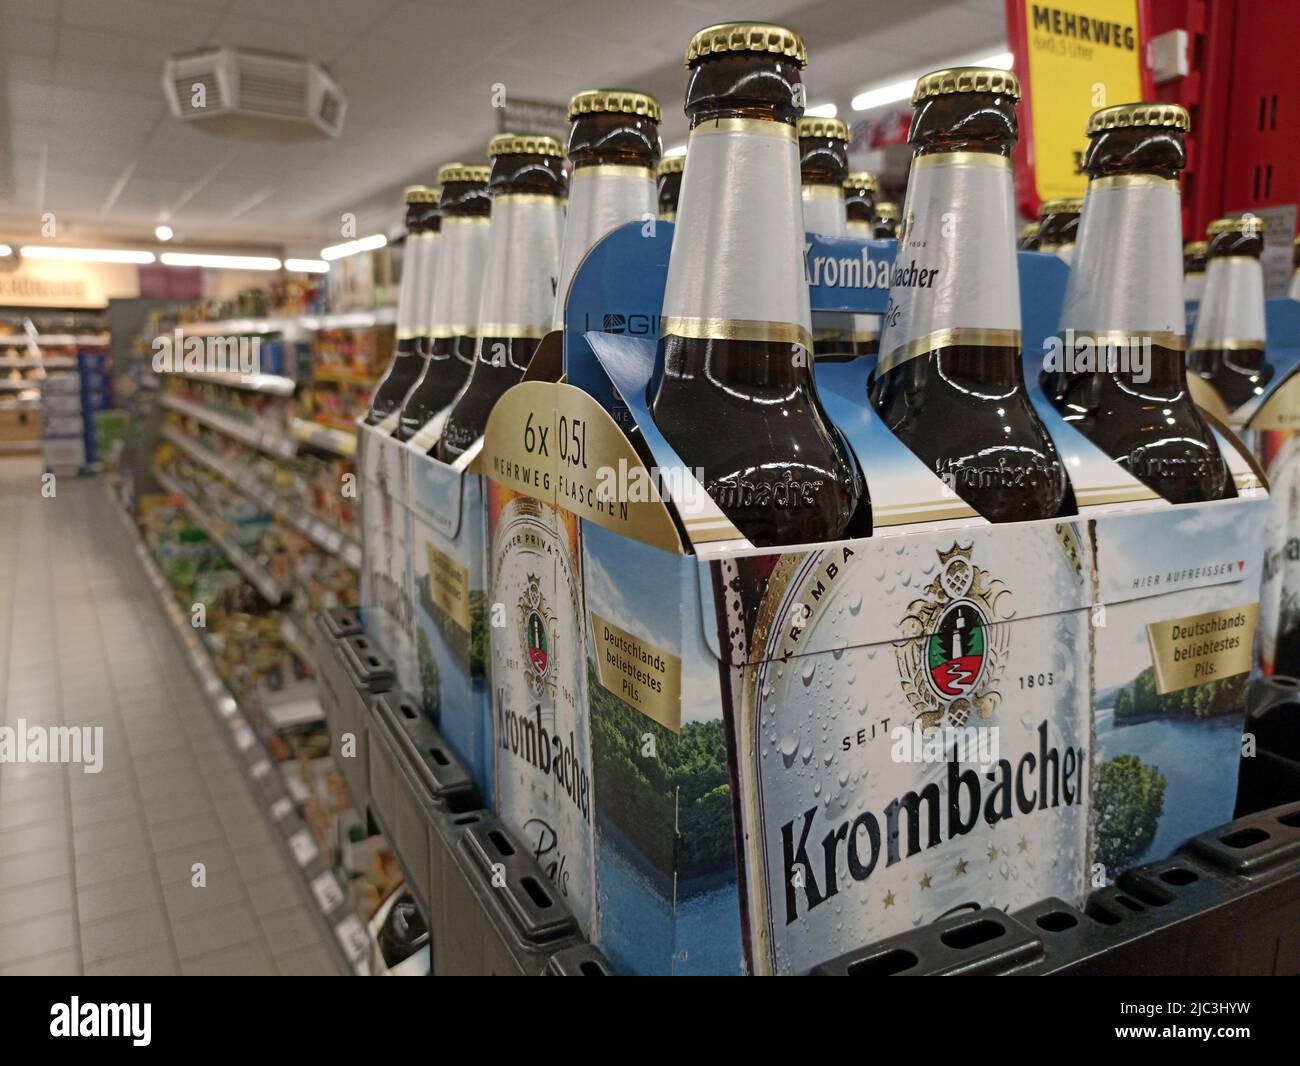 Kisten Krombacher Bier im Penny Store gesehen Stockfotografie - Alamy